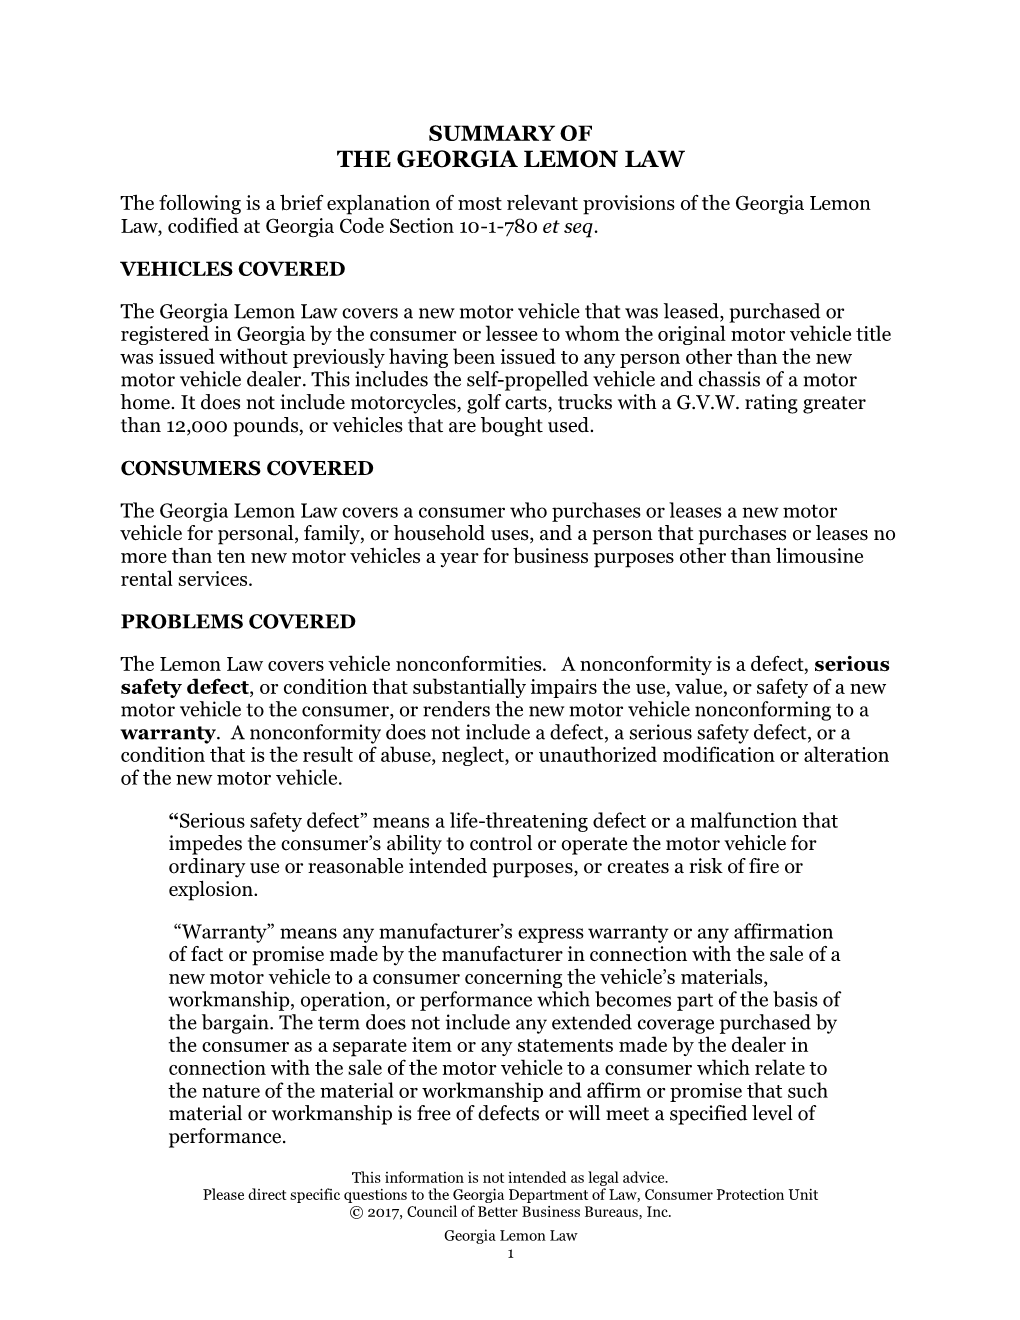 Summary of the Georgia Lemon Law